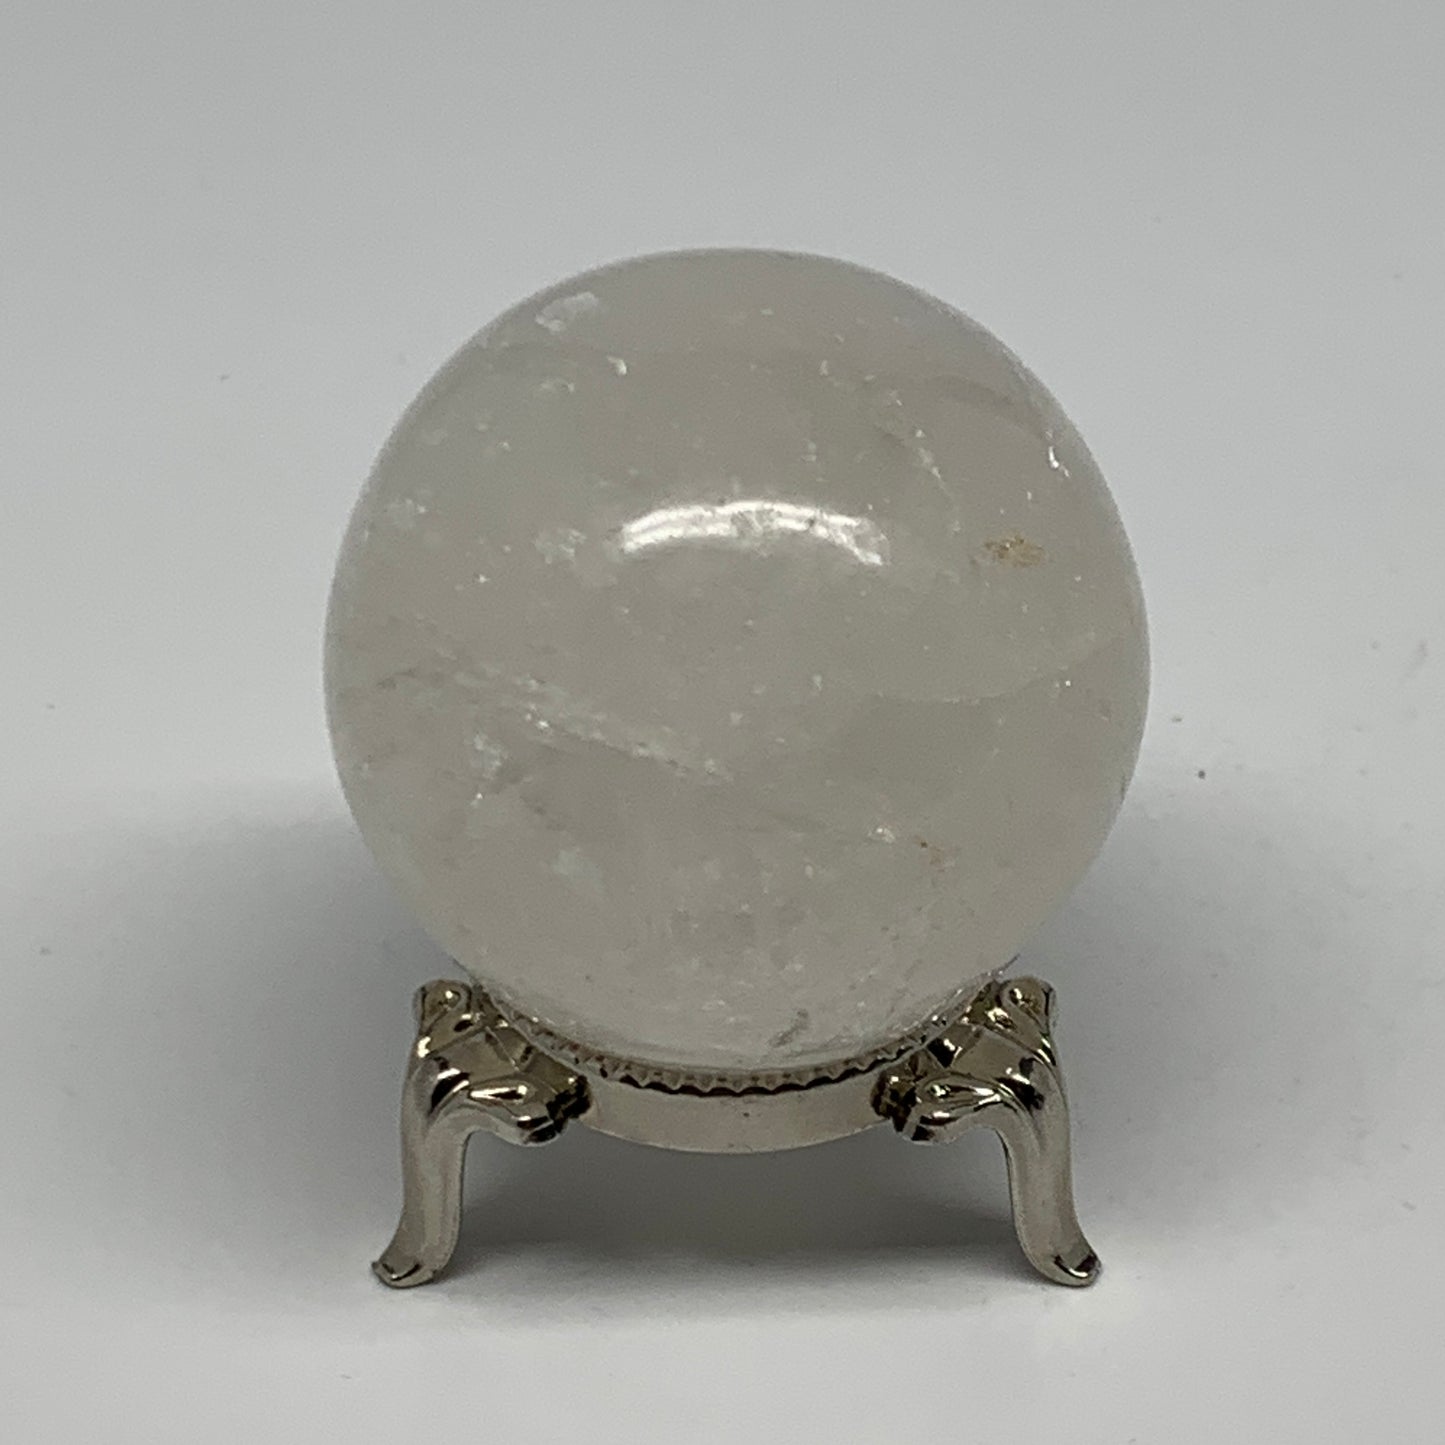 135.7g, 1.8" (45mm), Natural Quartz Sphere Crystal Gemstone Ball @Brazil, B22251